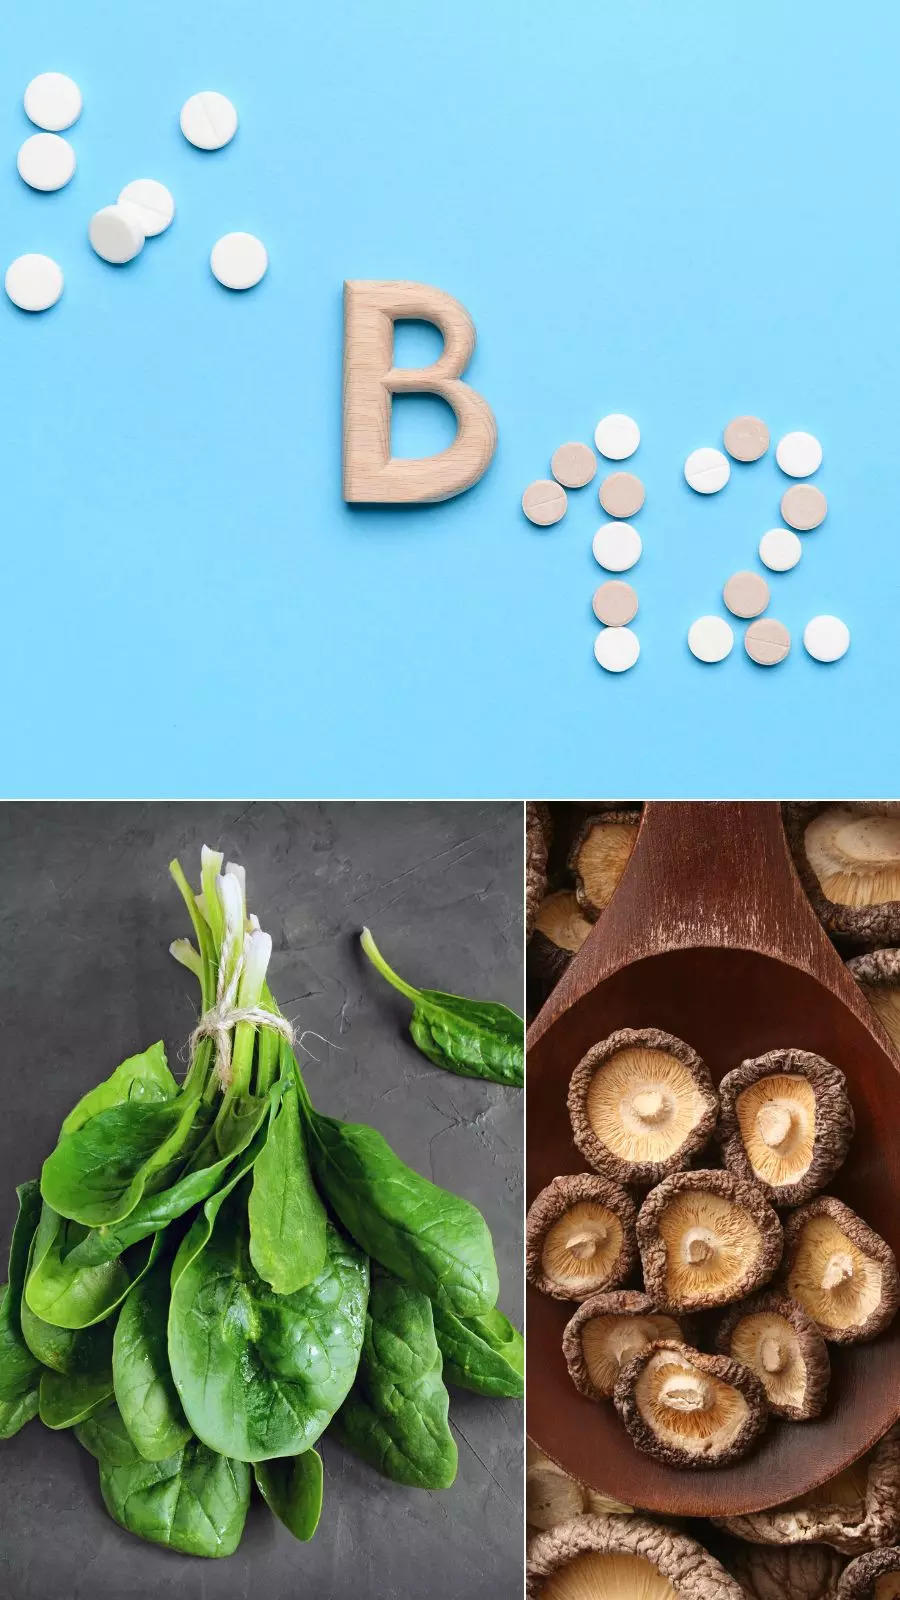 vitamin b12 foods